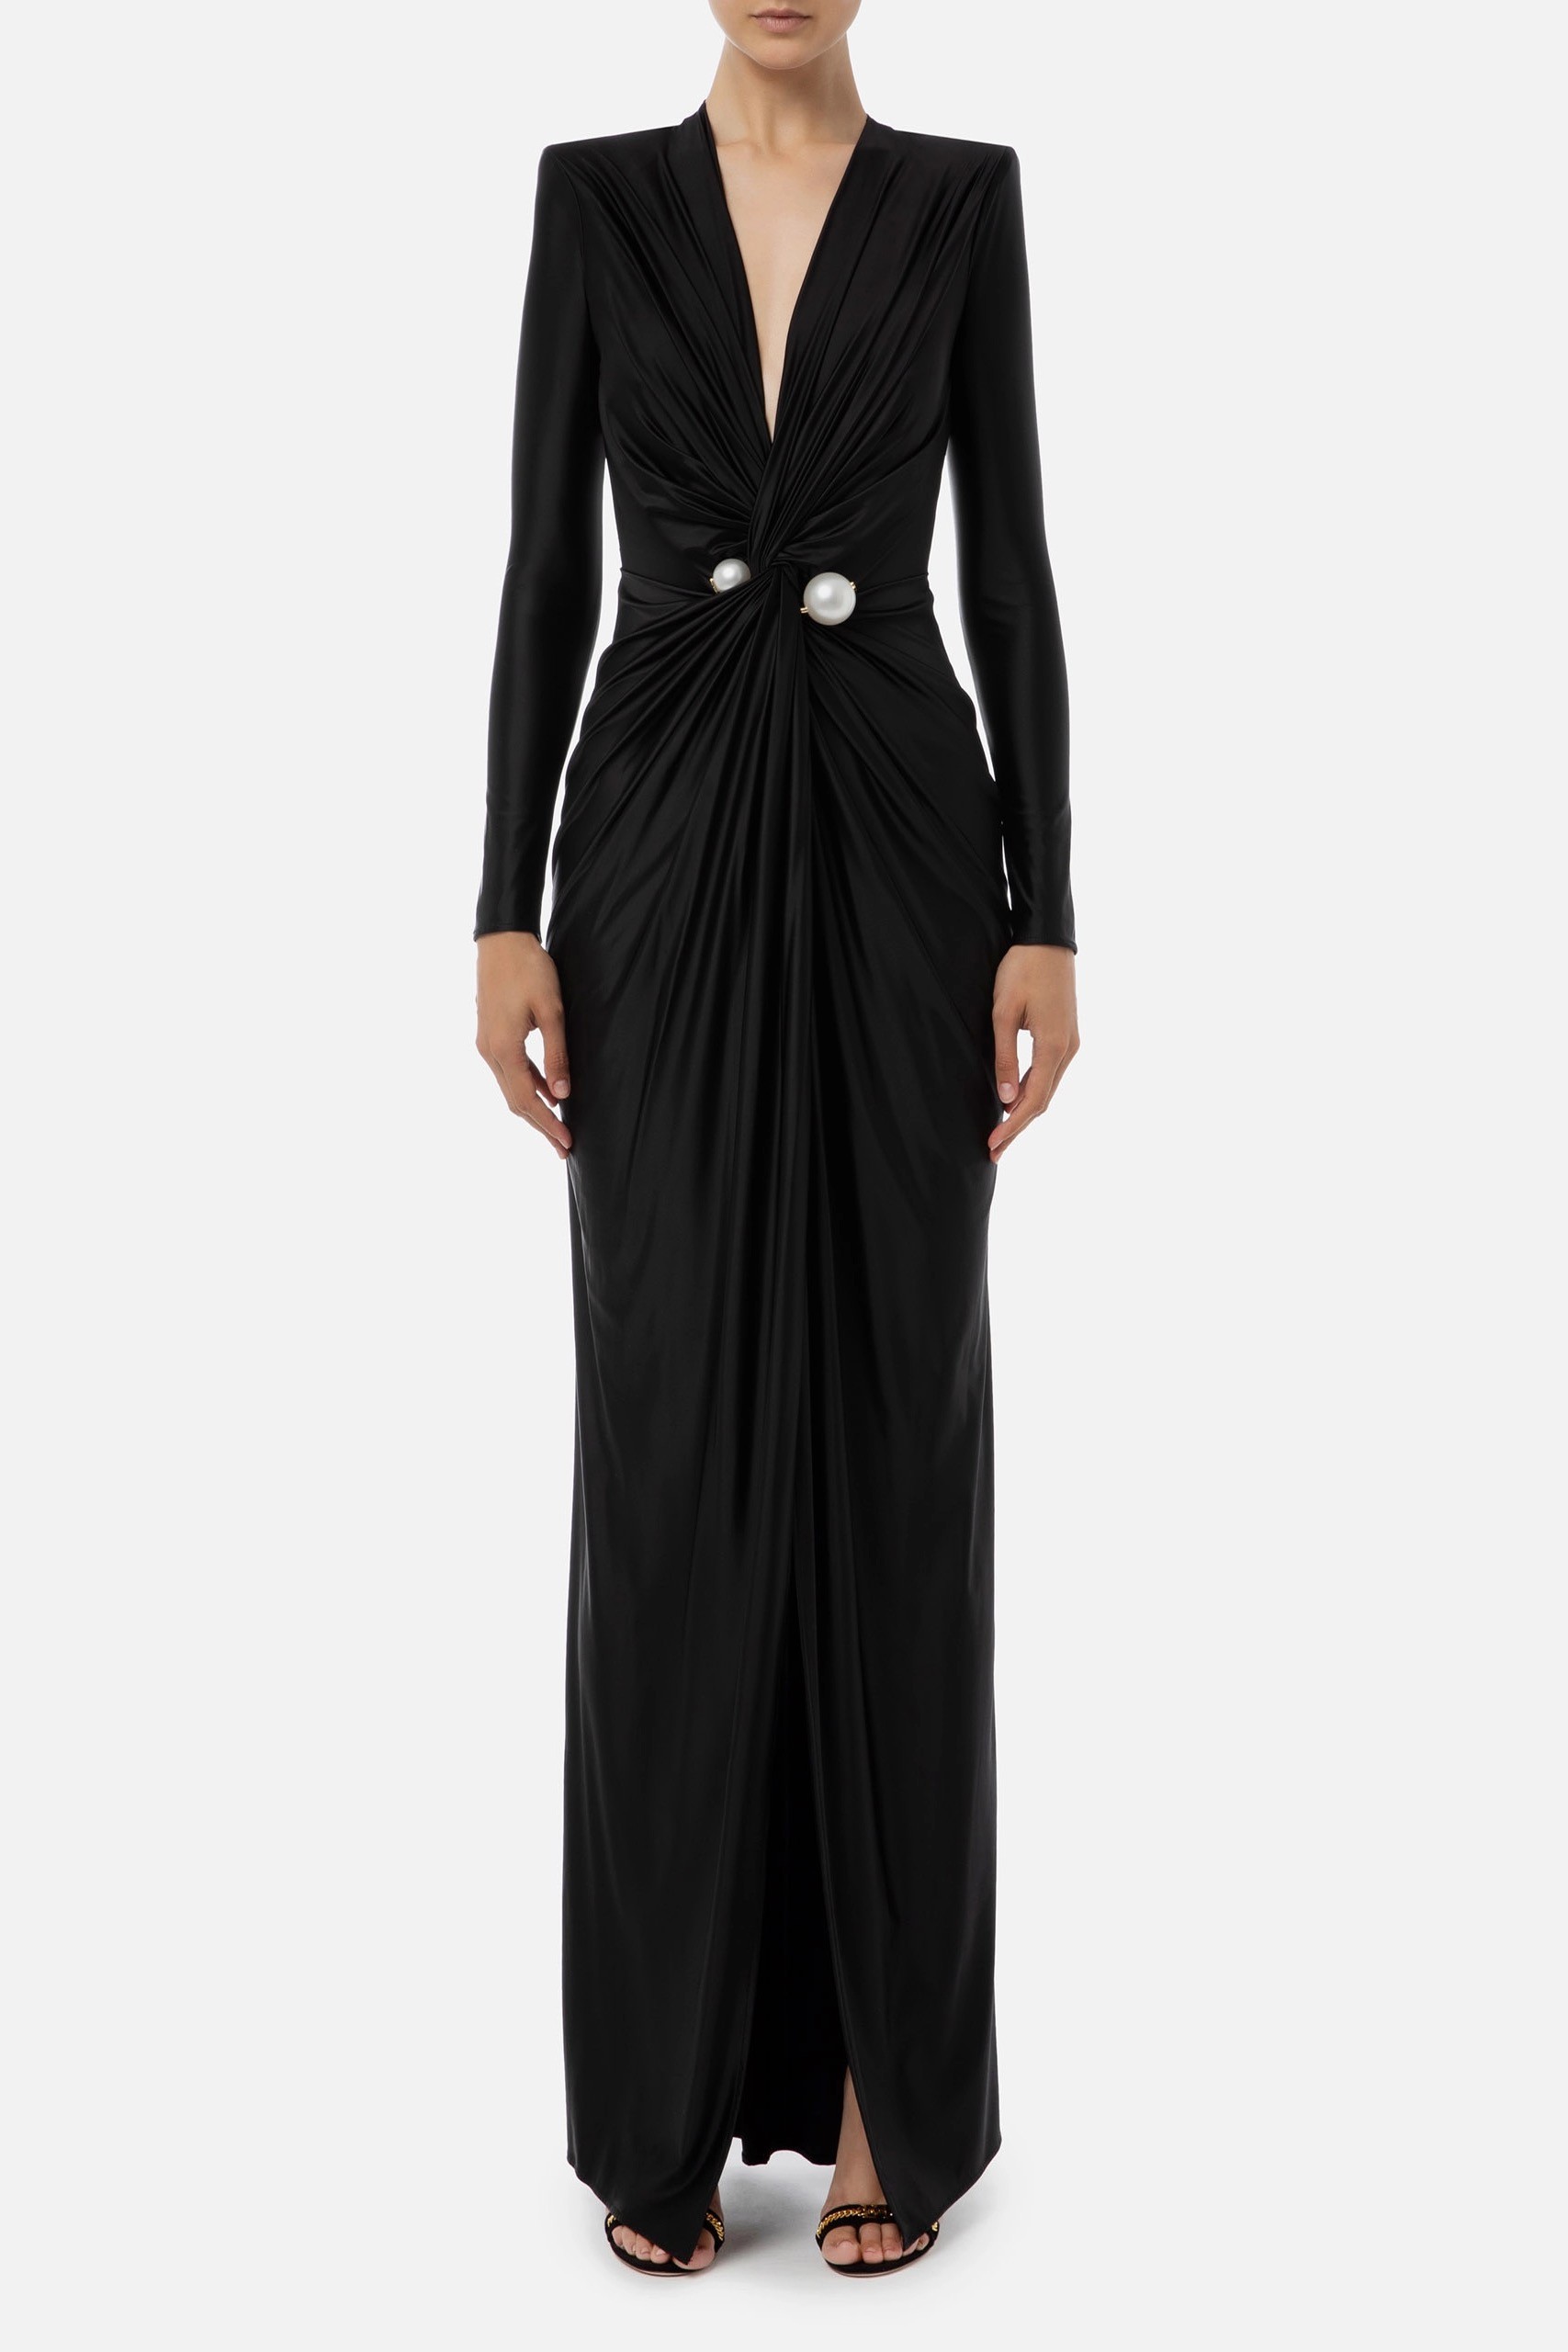 Elisabetta Franchi - Red Carpet dress in Lycra with pearls Black 